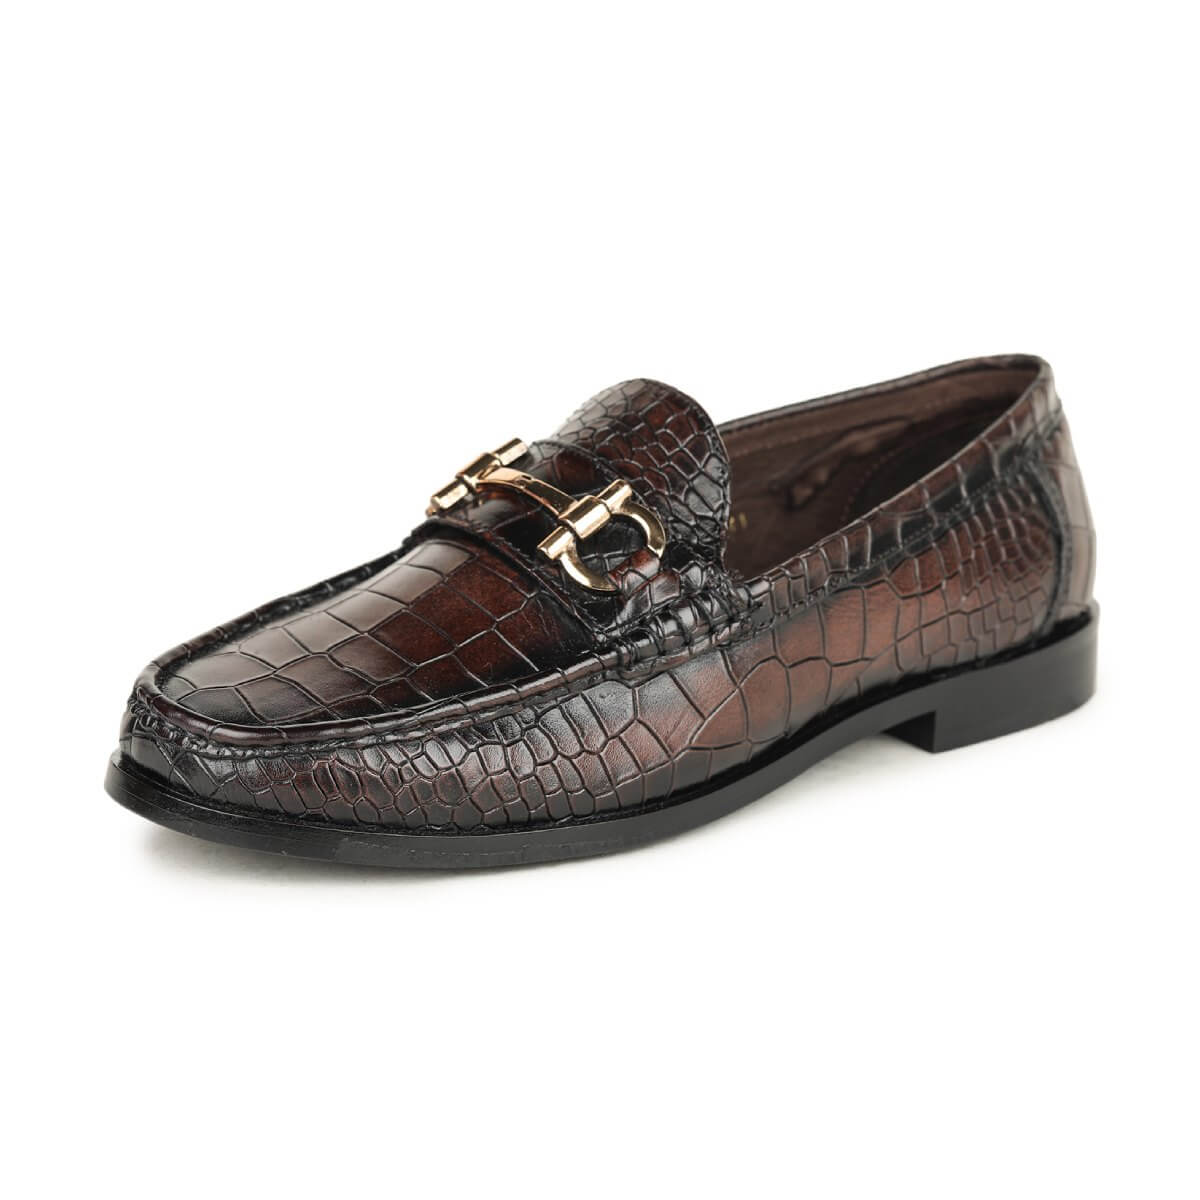 crocs loafer shoes brown_7